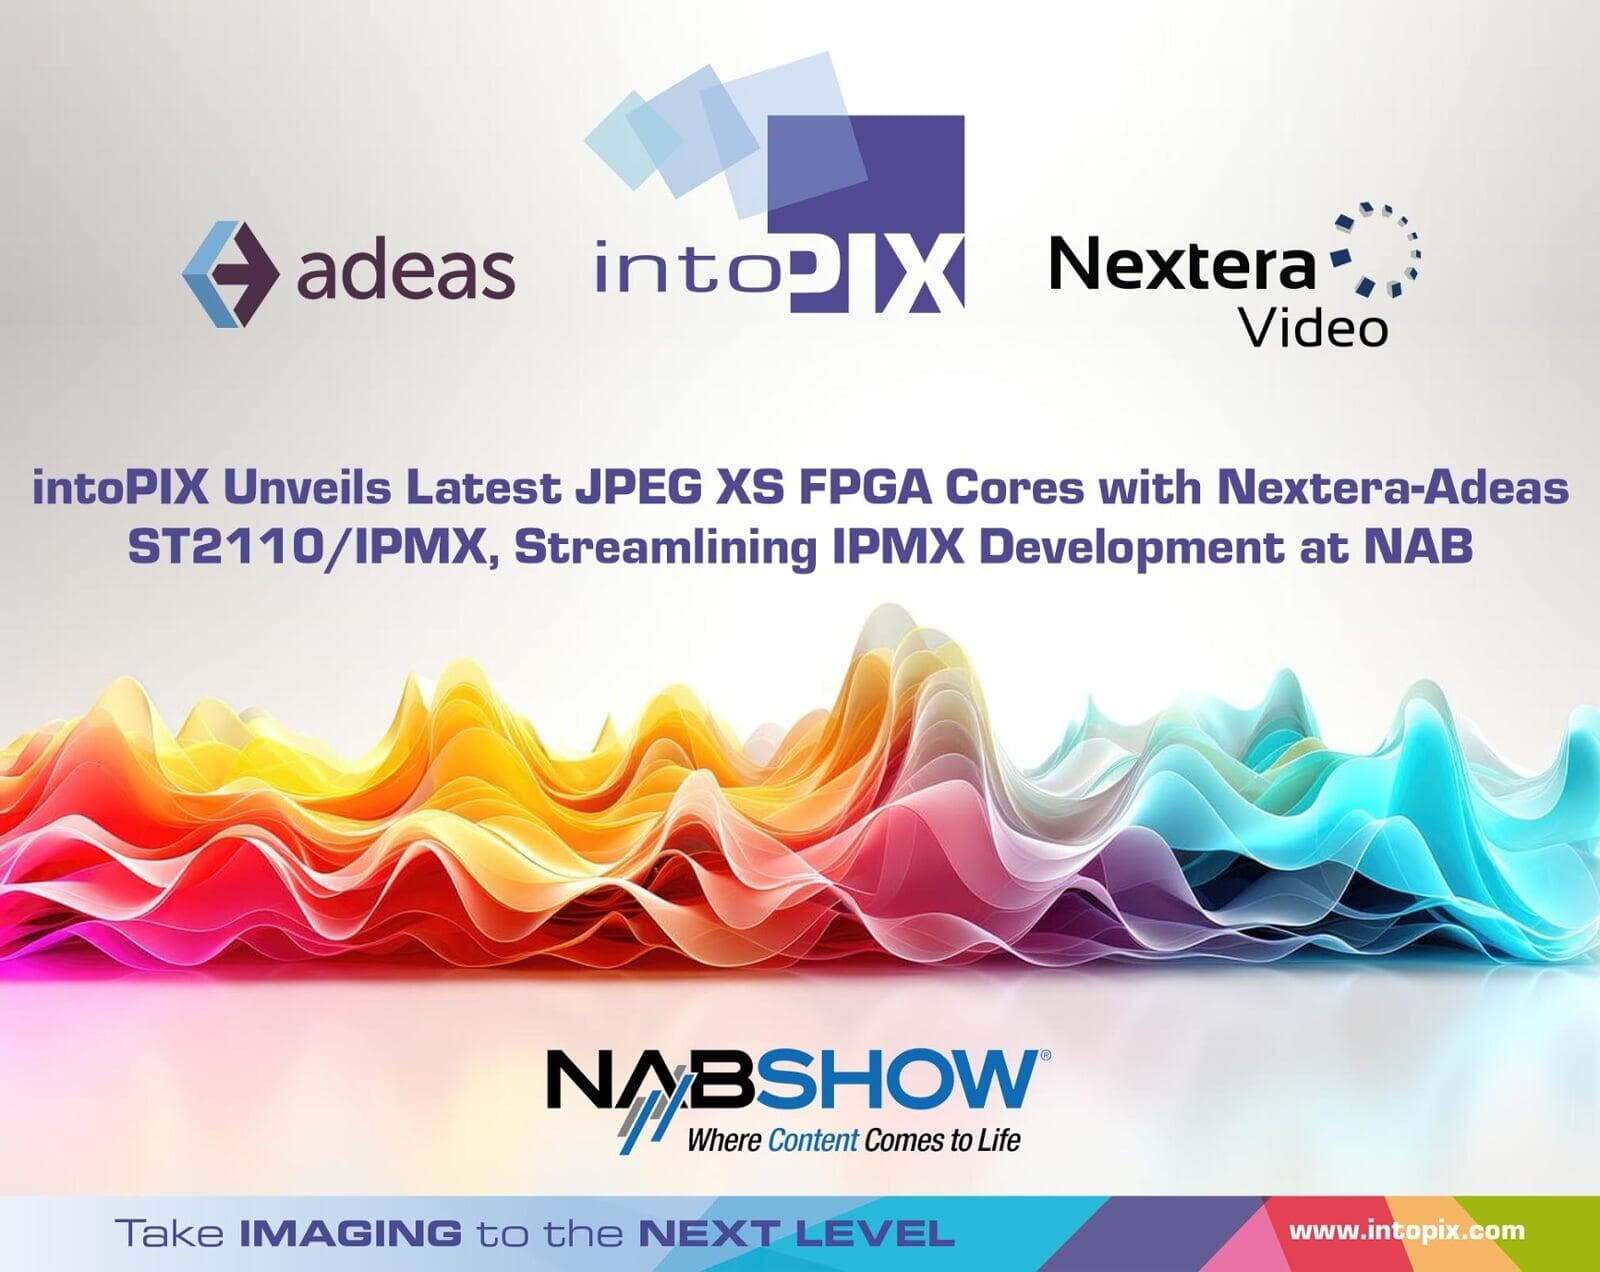 intoPIXは、NABショーで、Nextera-Adeas社ST2110/IPMXストリーミングIPMX開発で最新のJPEG XS FPGAコアを発表。